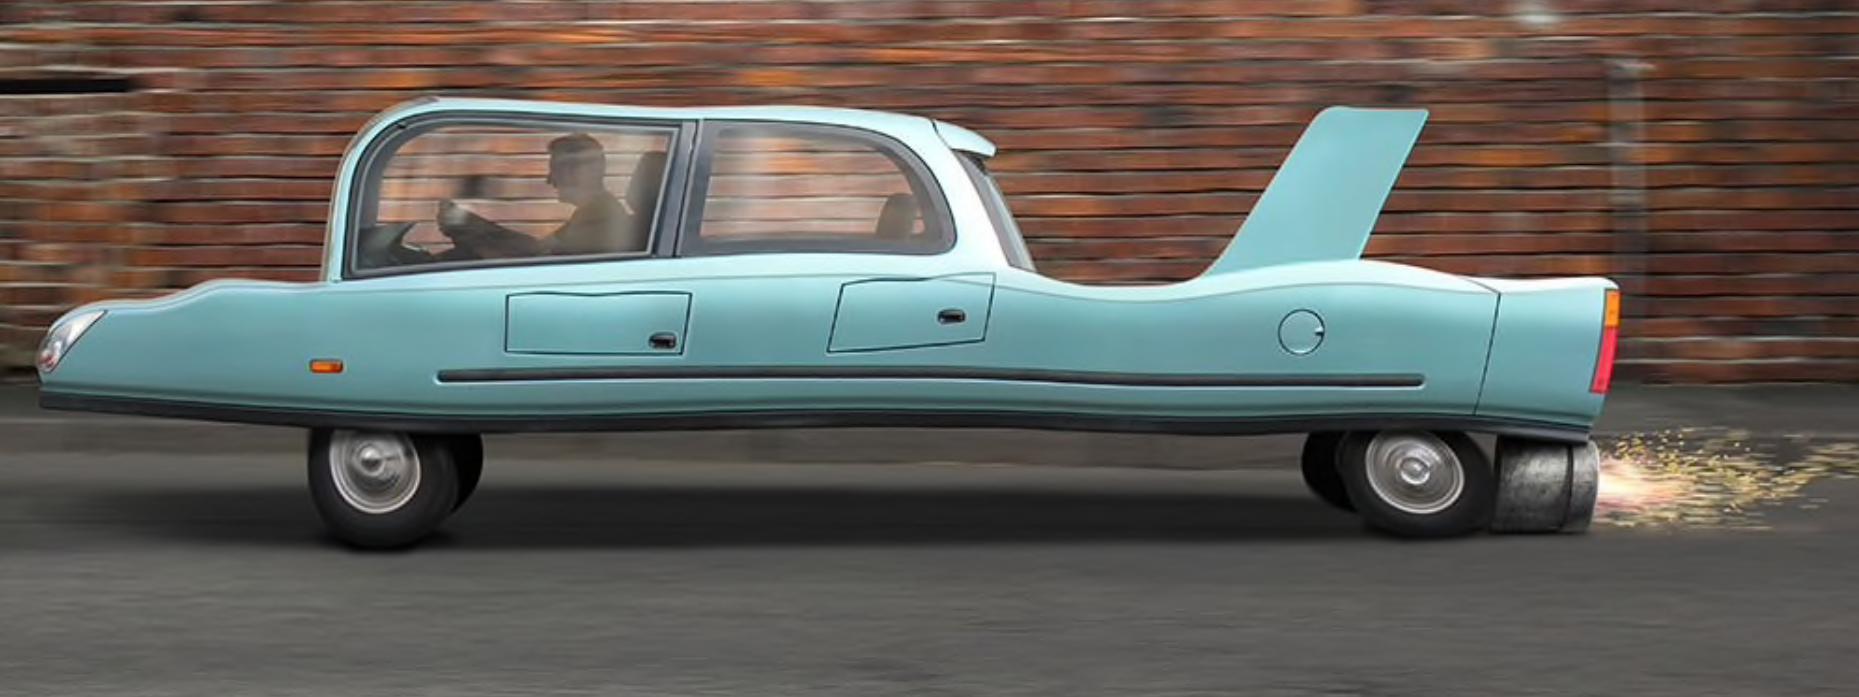 retro-futuristic car